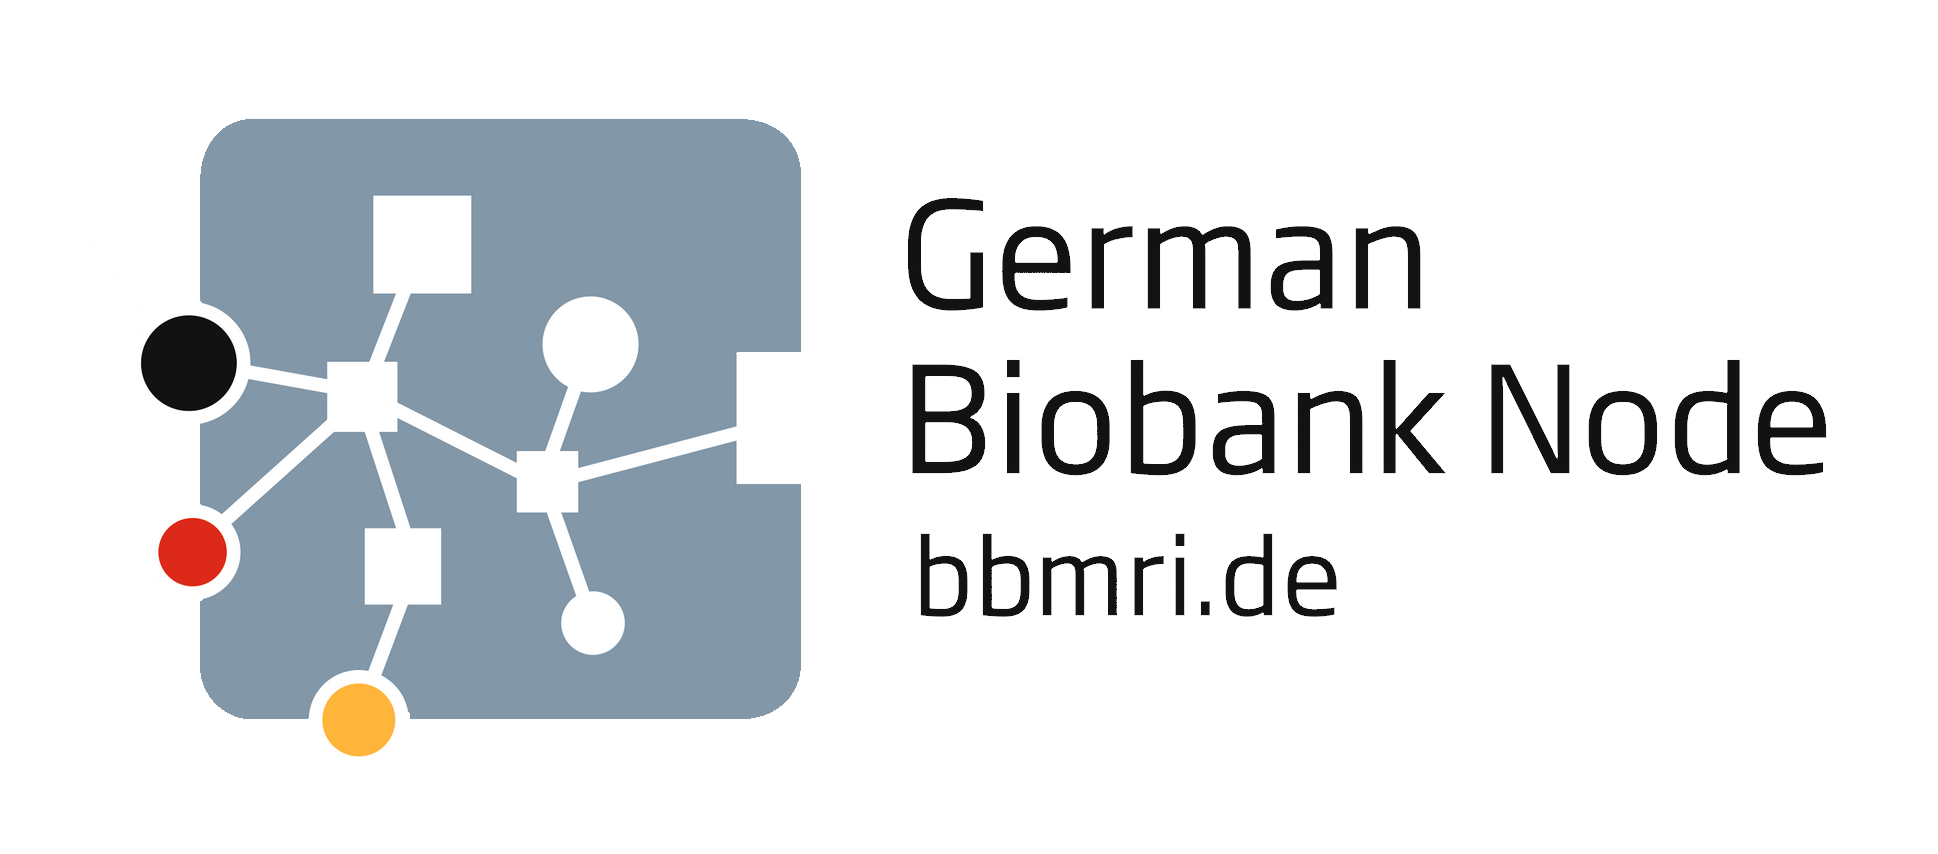 German Biobank Node